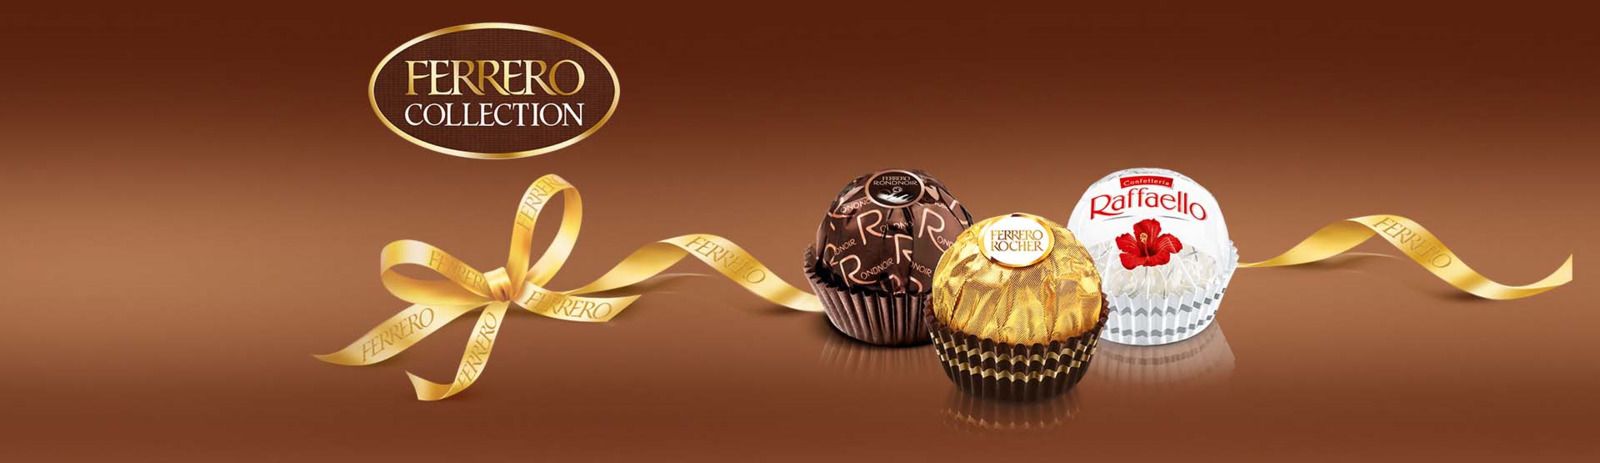 Ferrero Collection  : Raffaello, Ferrero Rocher, Ferrero Rondnoir, 172,2 